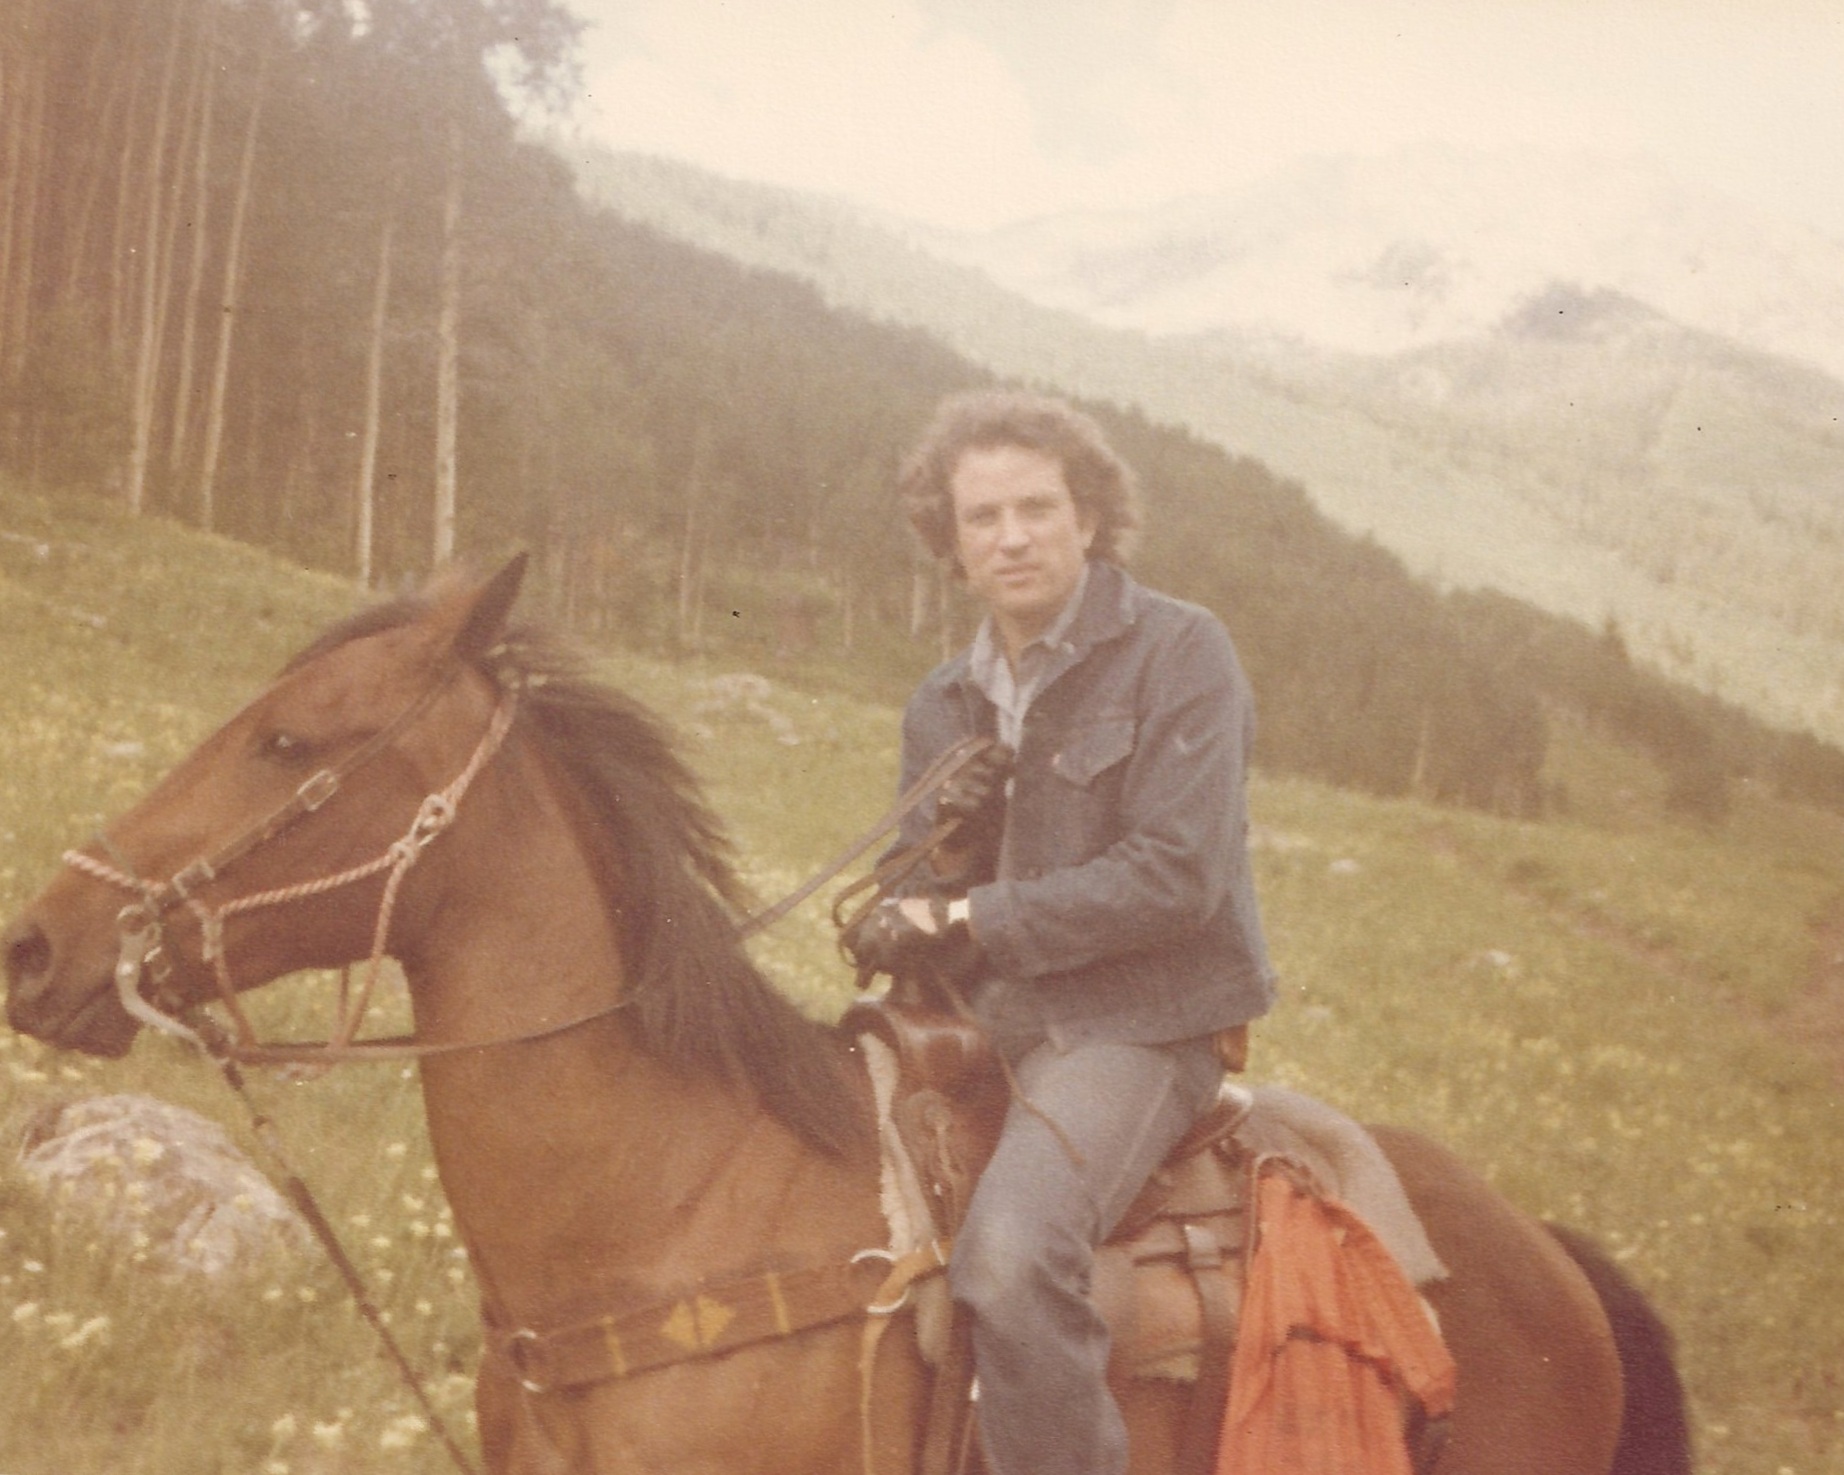 Goehl riding his horse in Colorado in 1976